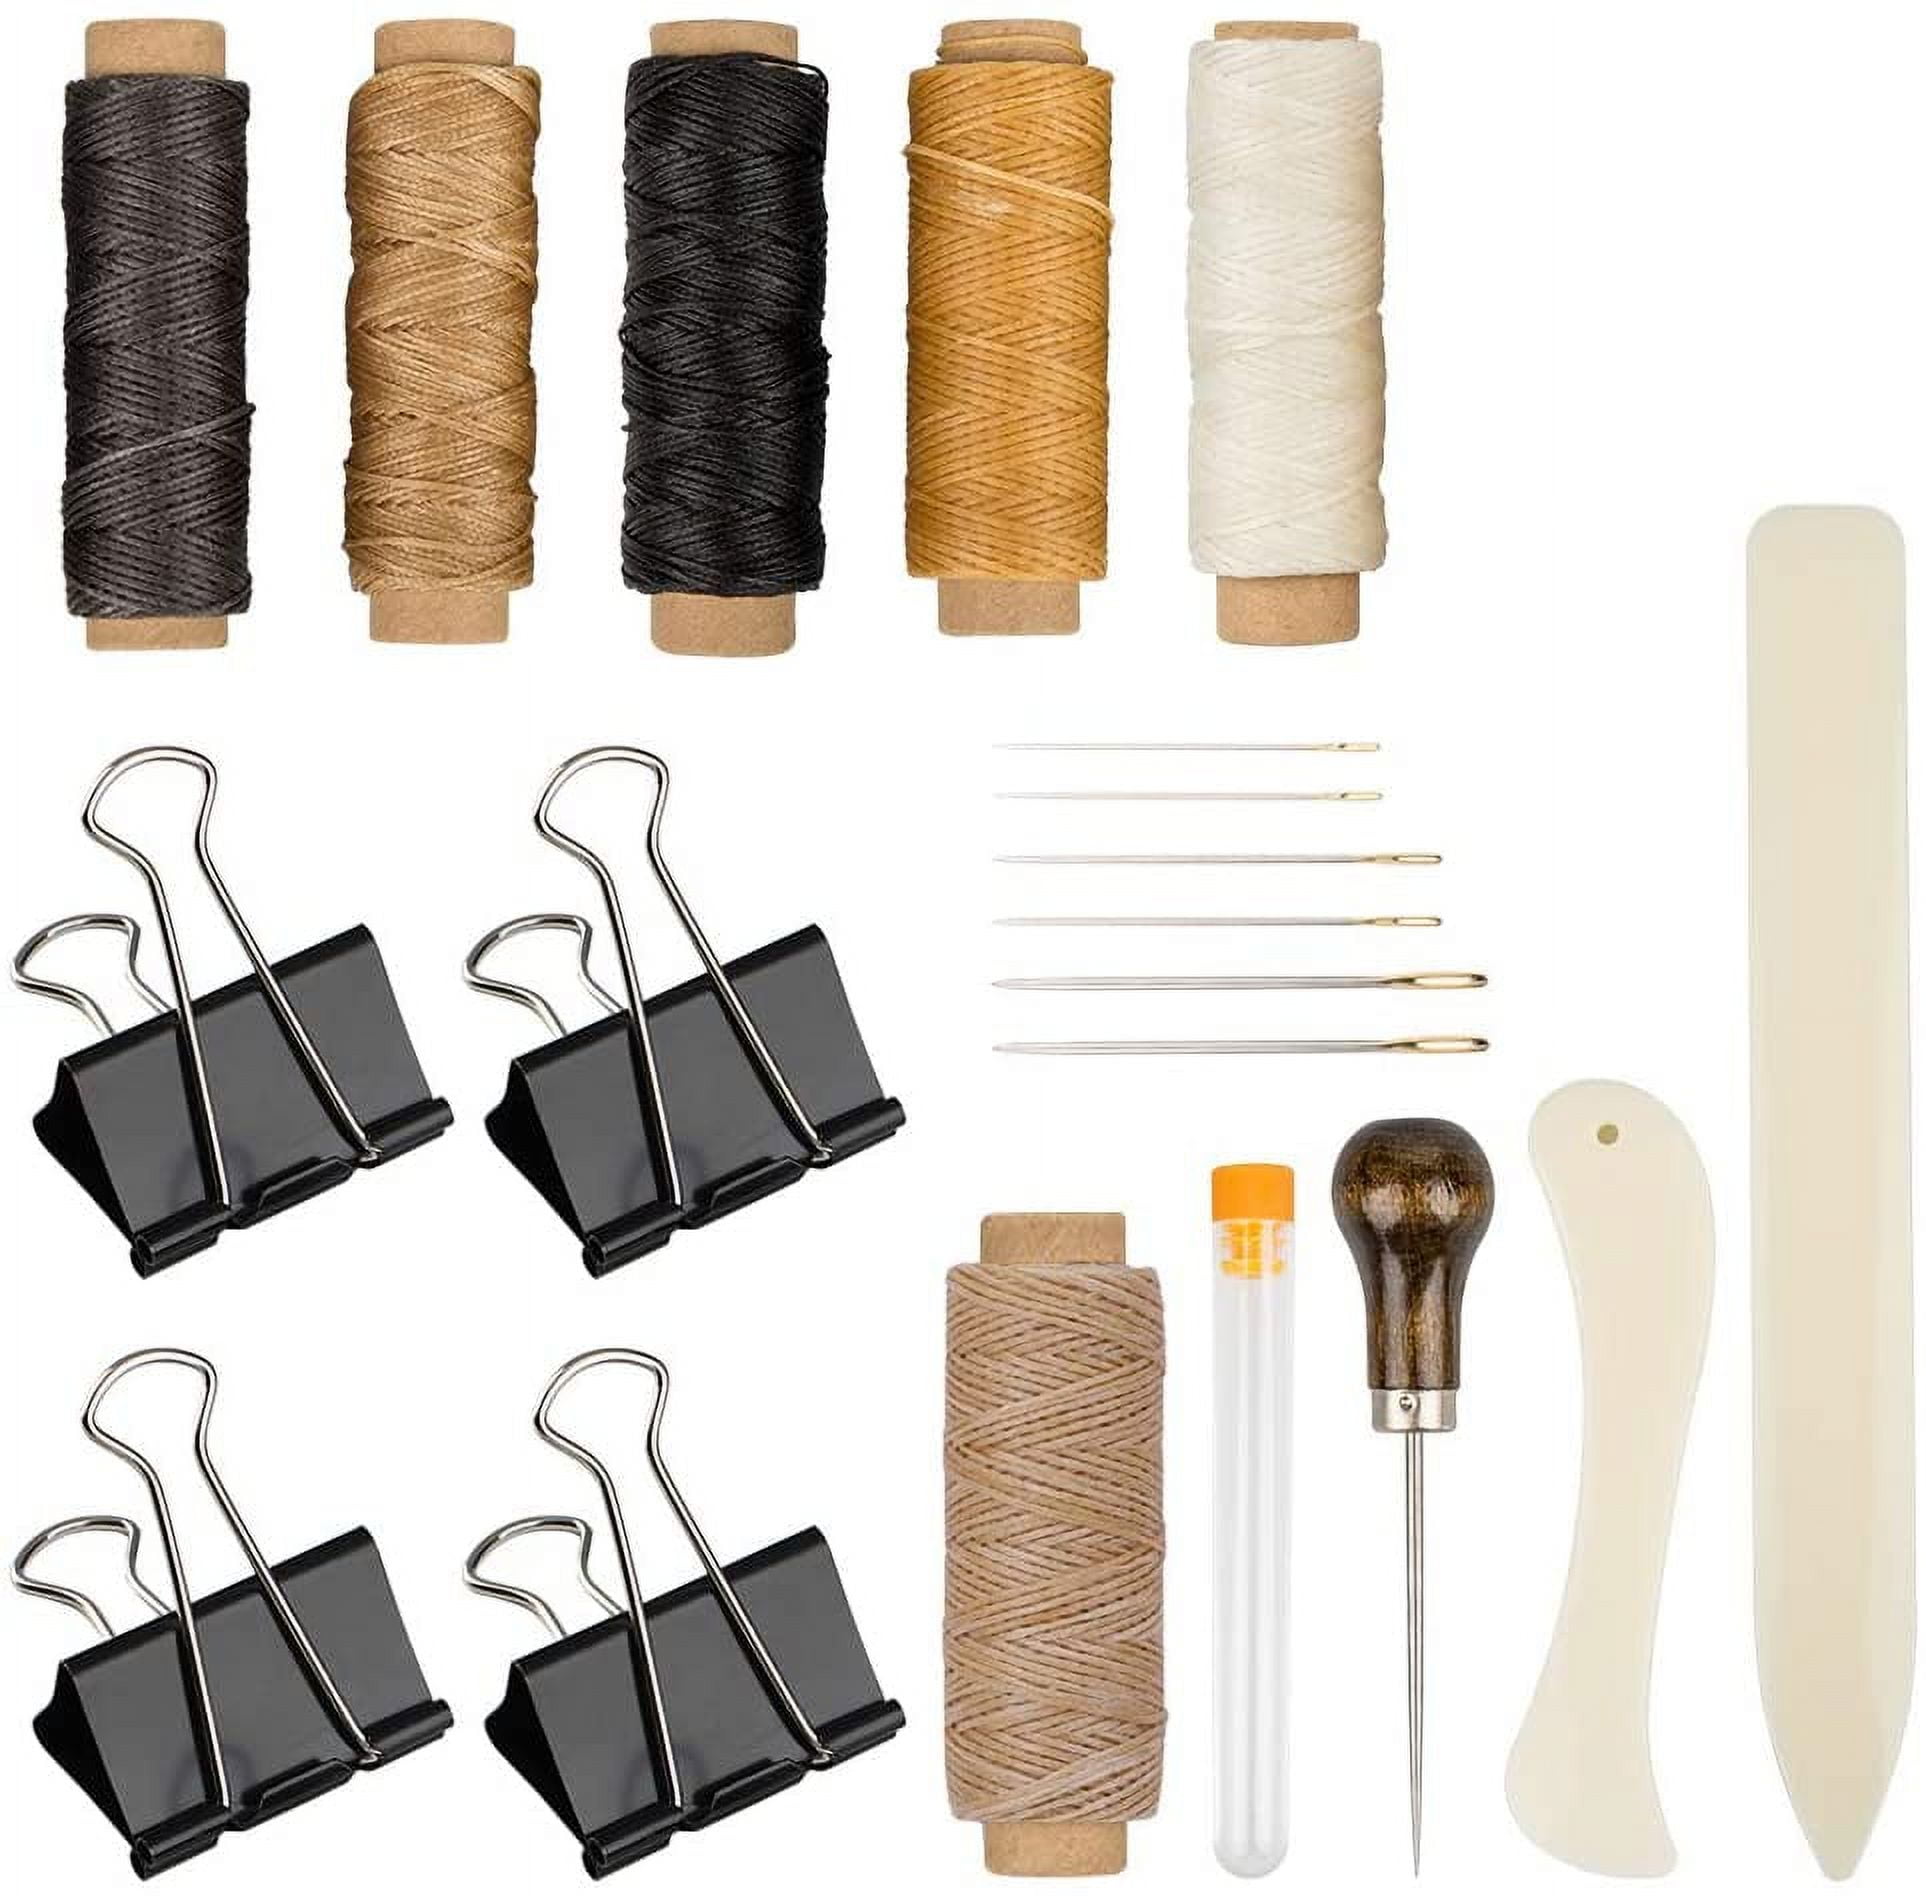 6 Pcs Bookbinding Kit Hand Bookbinding Tools Set Book Binding Kit  Bookbinding Supplies with Wood Awl Wax Thread Curved Needle Sewing Needle  Binding